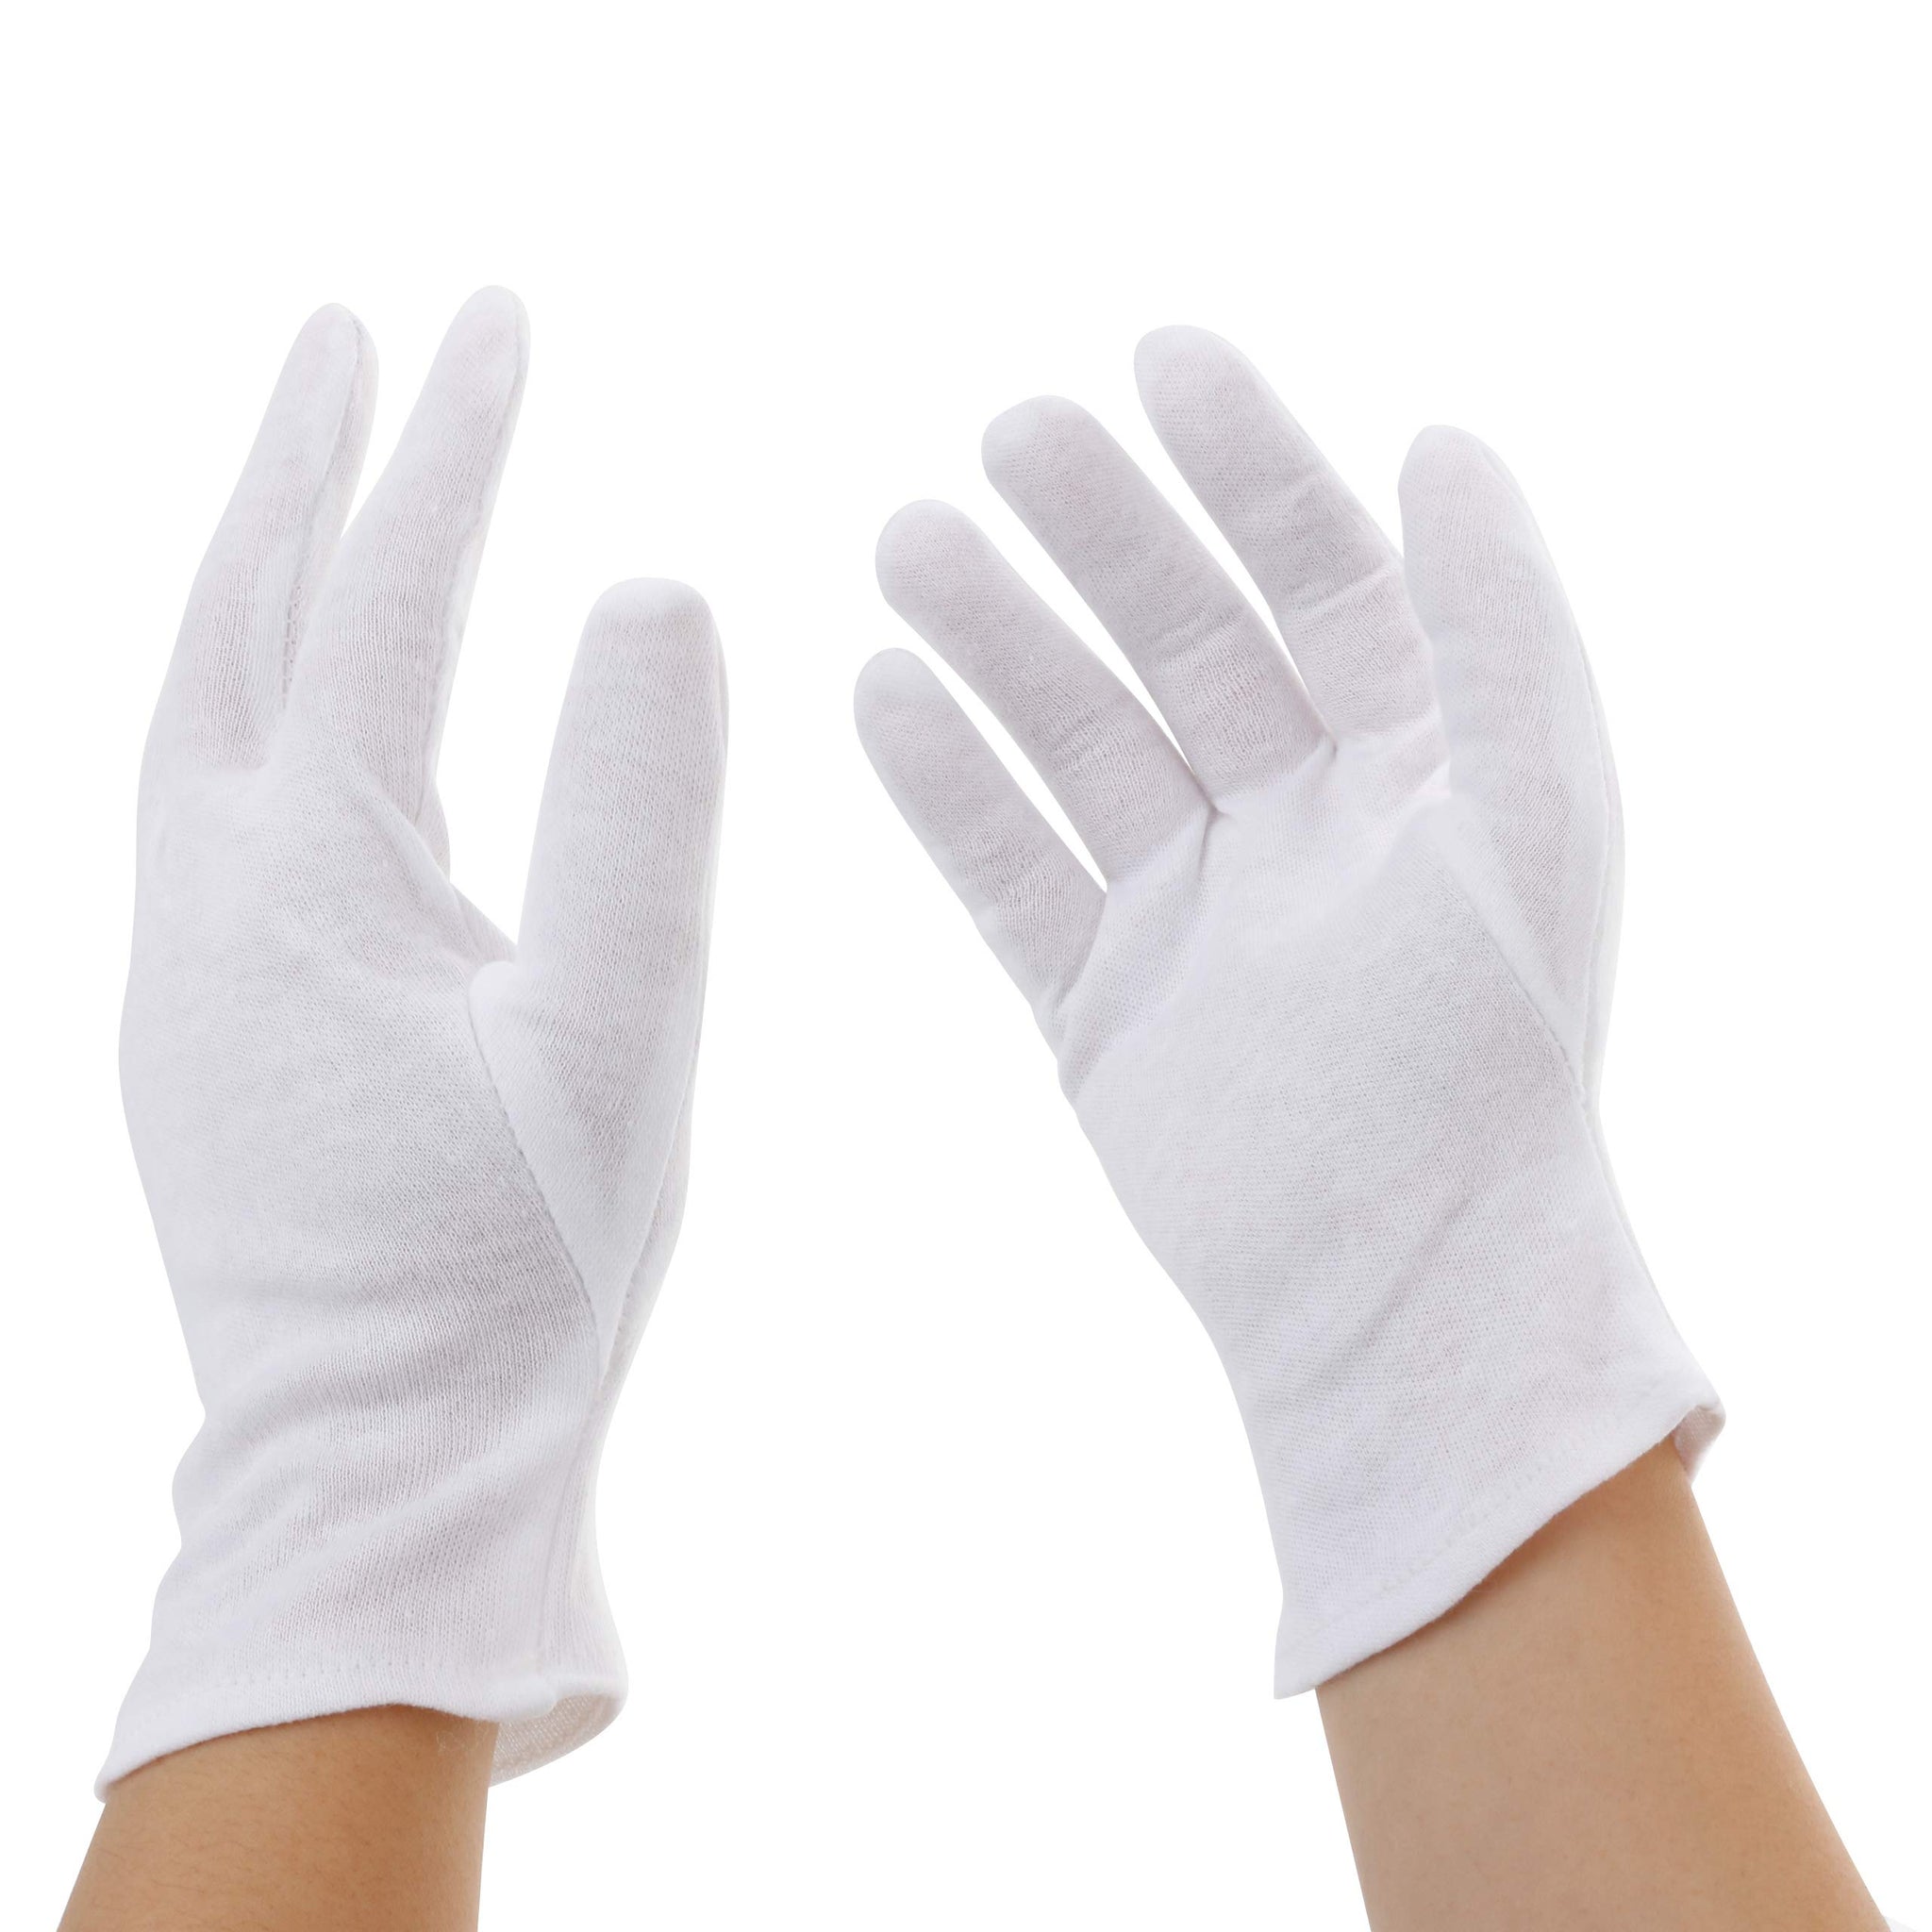 Incutex 12 paia di guanti stoffa in cotone, bianchi, taglia L